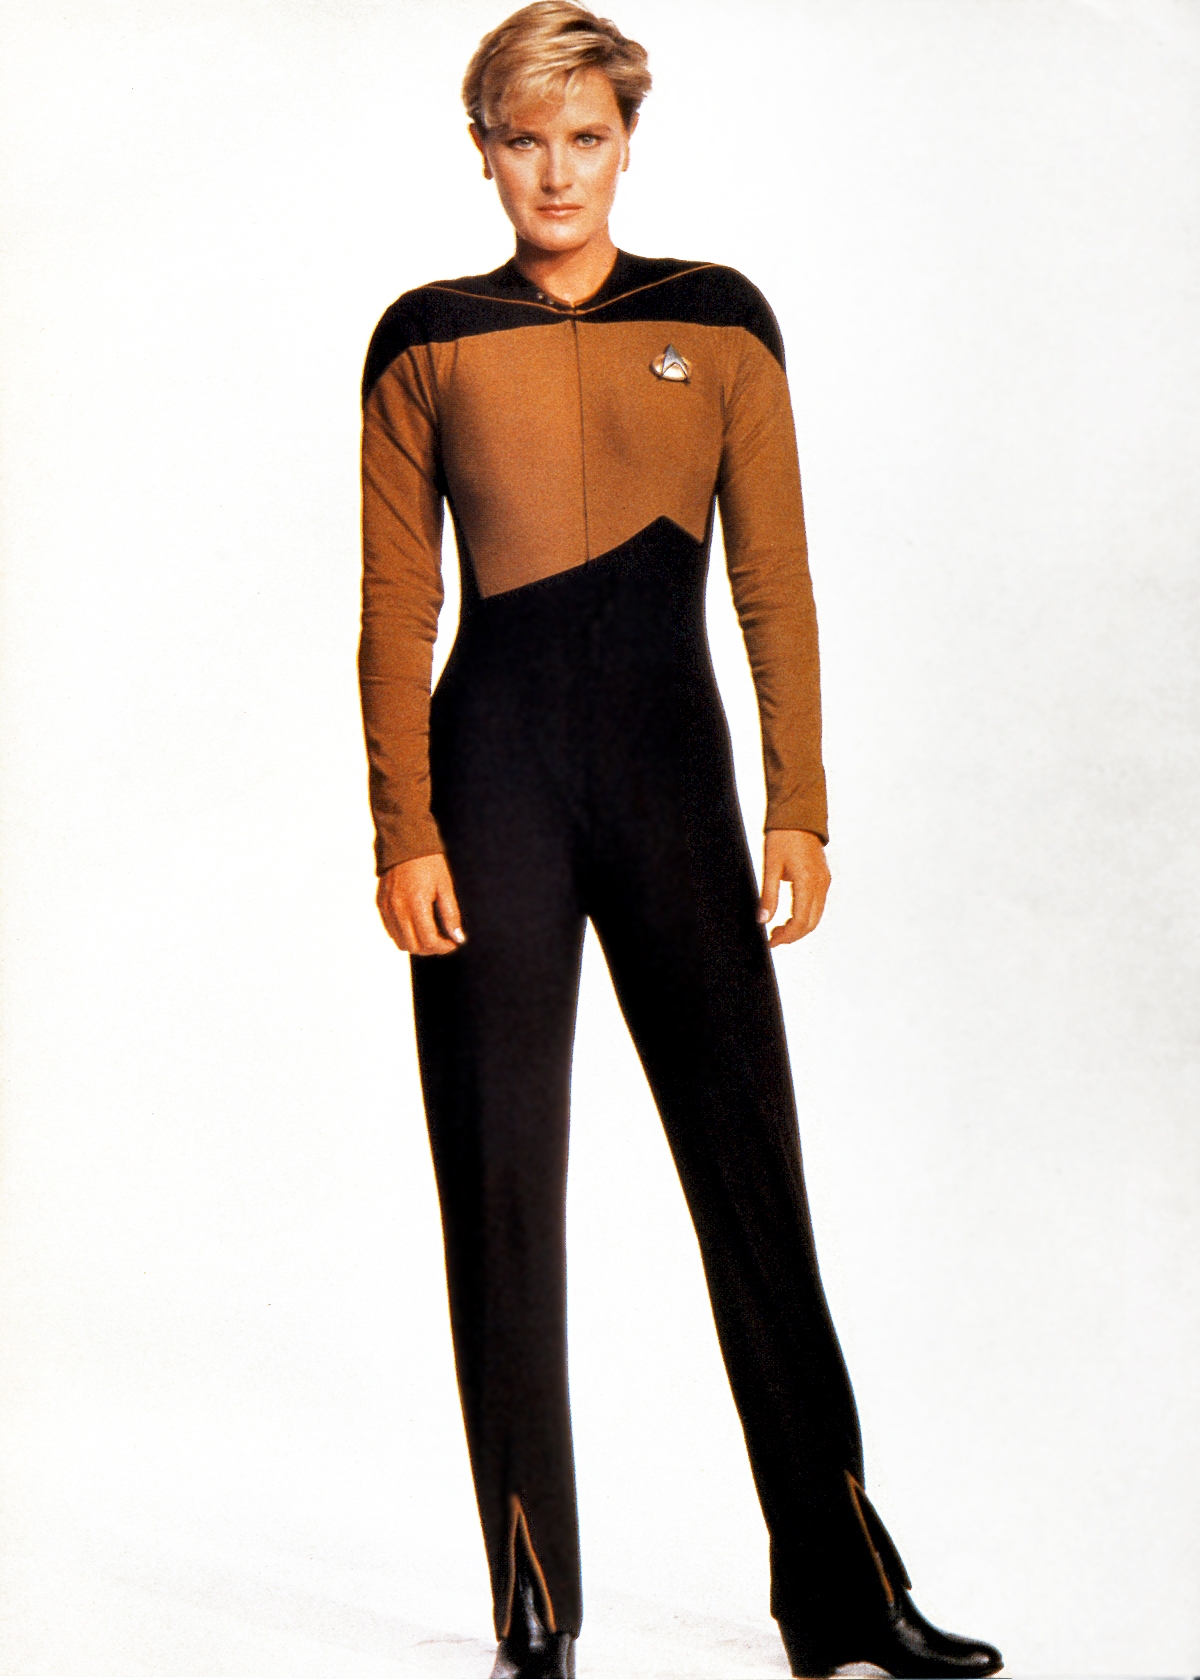 Tasha Yar season 1 publicity photo - Star Trek Costume Guide